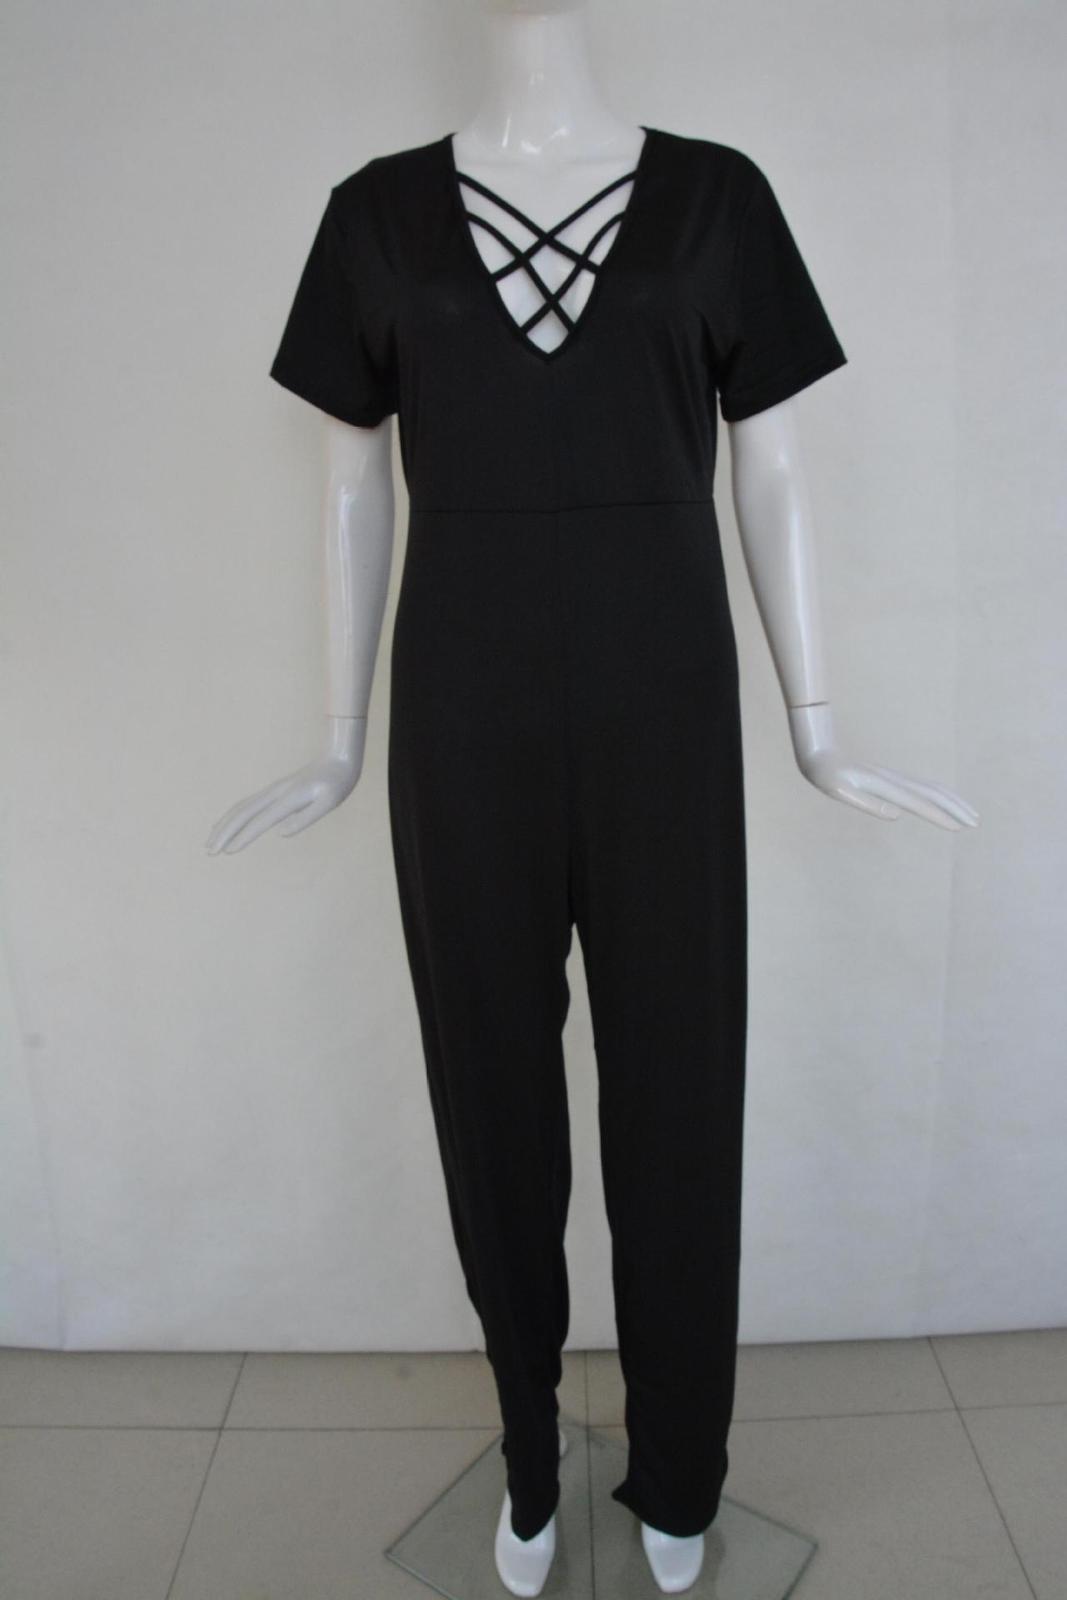 Plus Size, Short Sleeves, Solid Black, Spandex, One-piece Jumpsuit ...